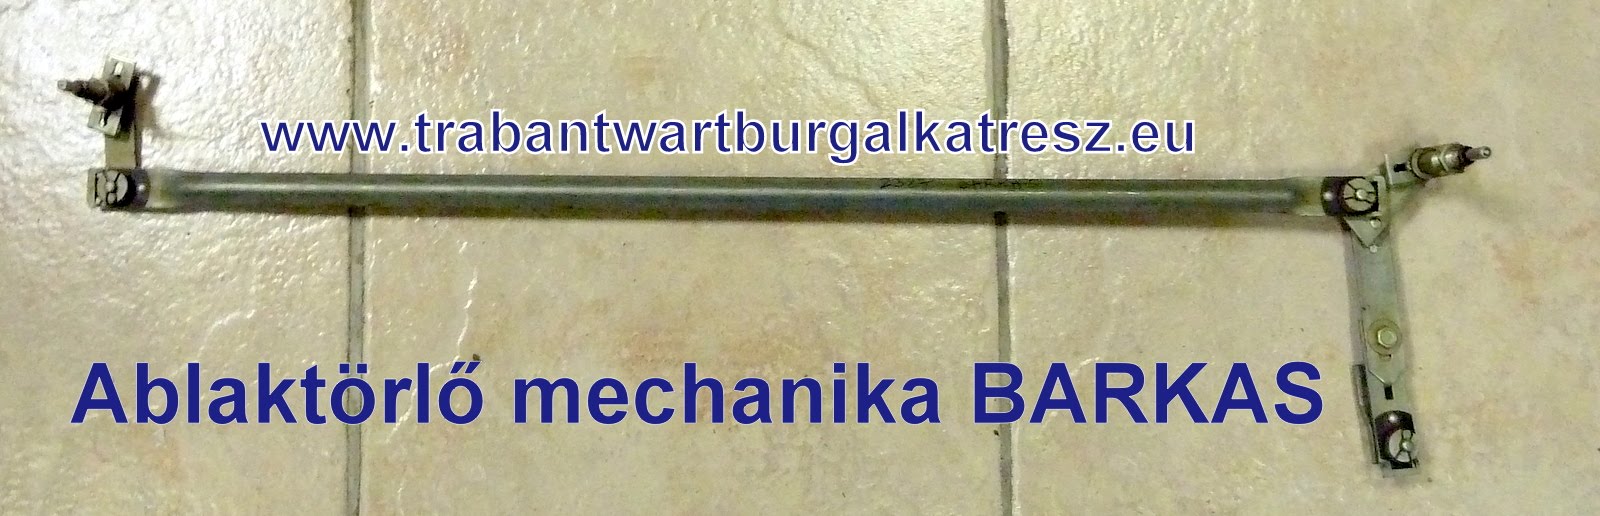 Ablaktörlő mechanika DDR (Barkas)